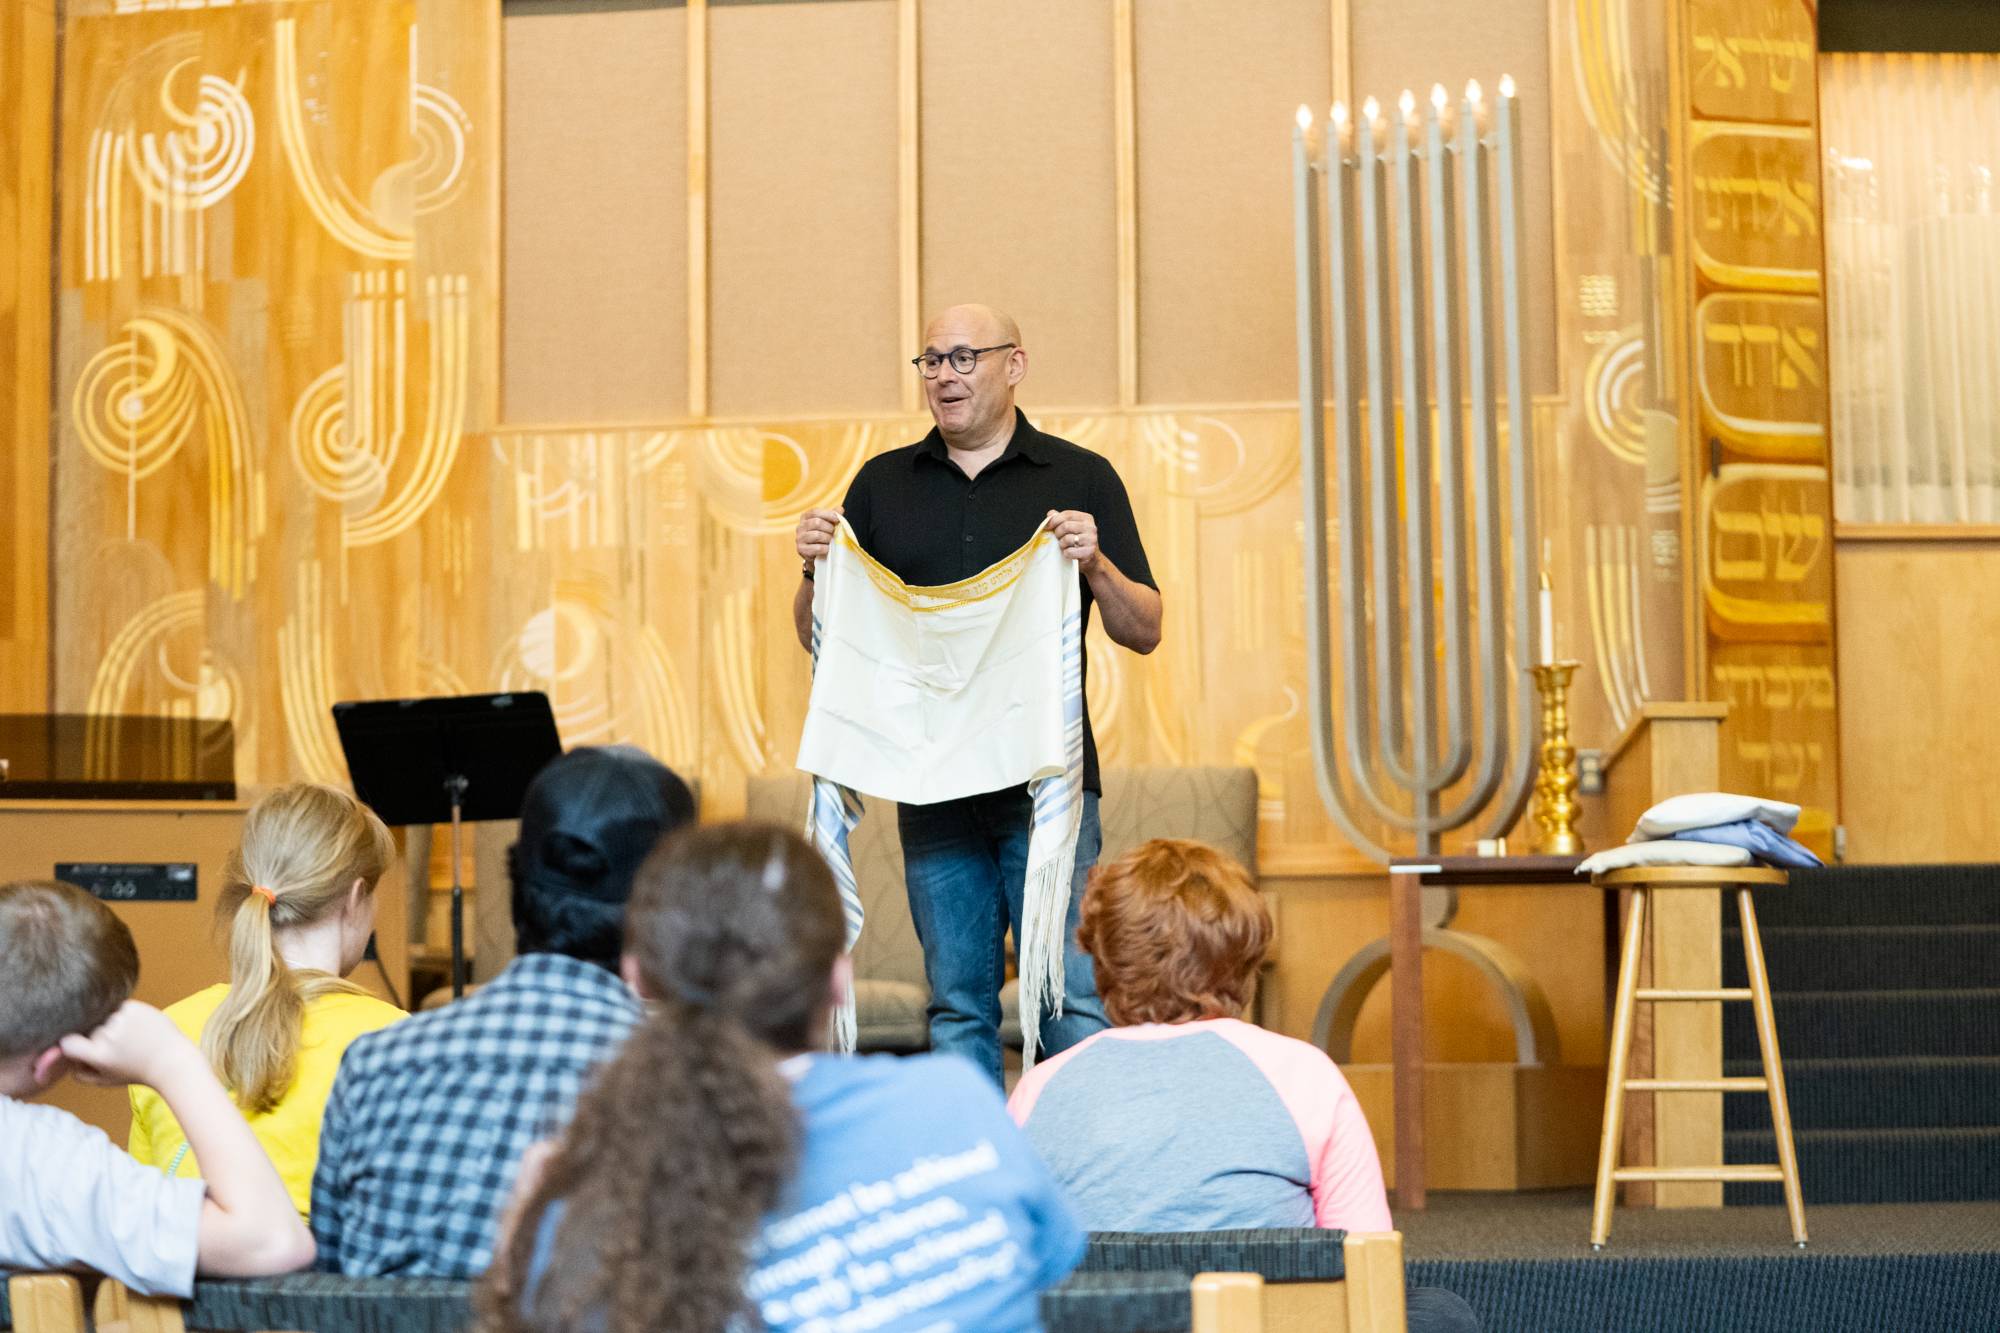 Rabbi Michael Shadick at Temple Emanuel